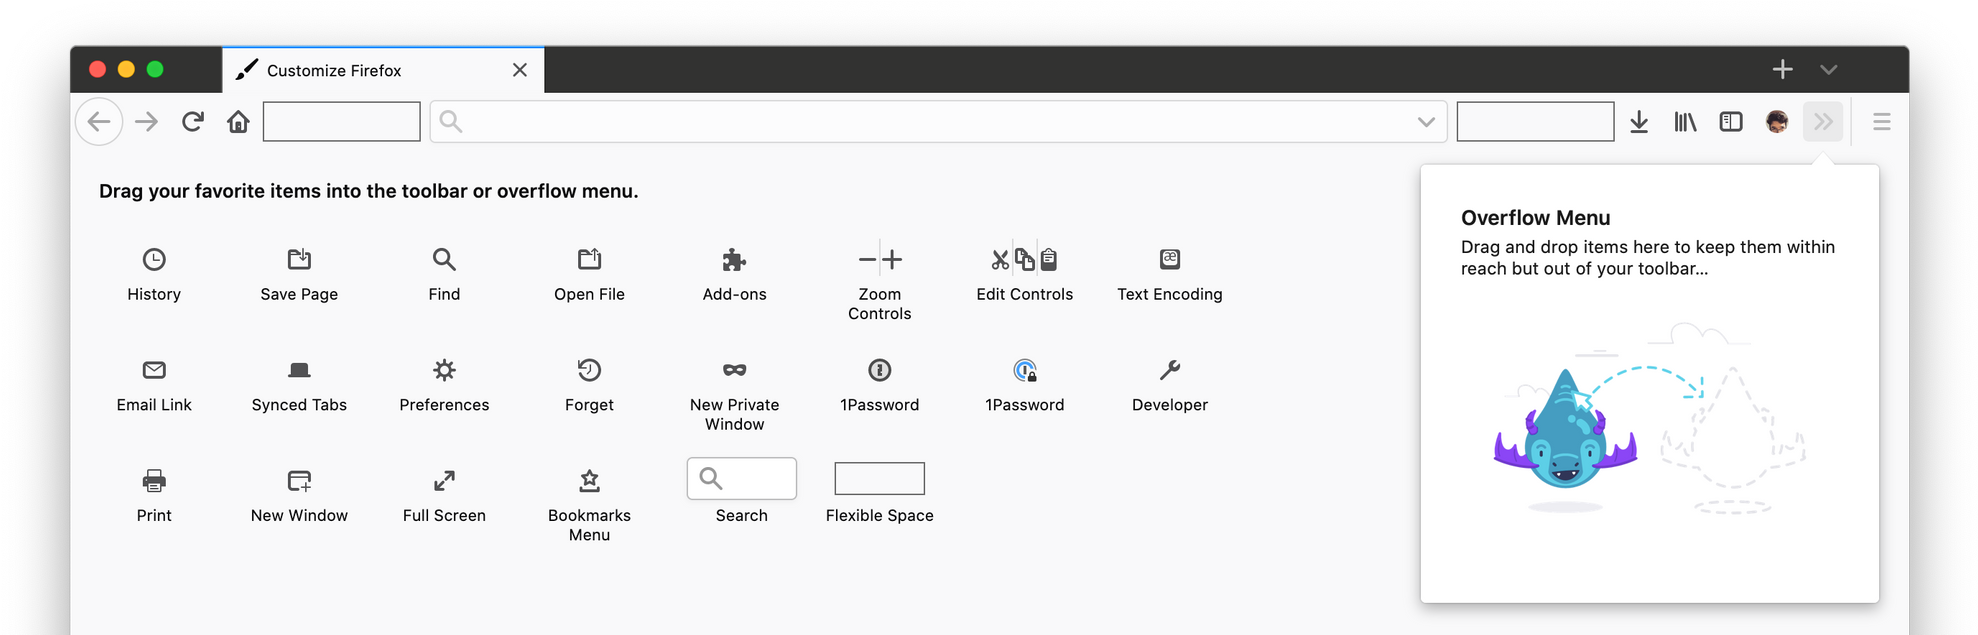 Firefox Customize Toolbar Options Screenshot PNG